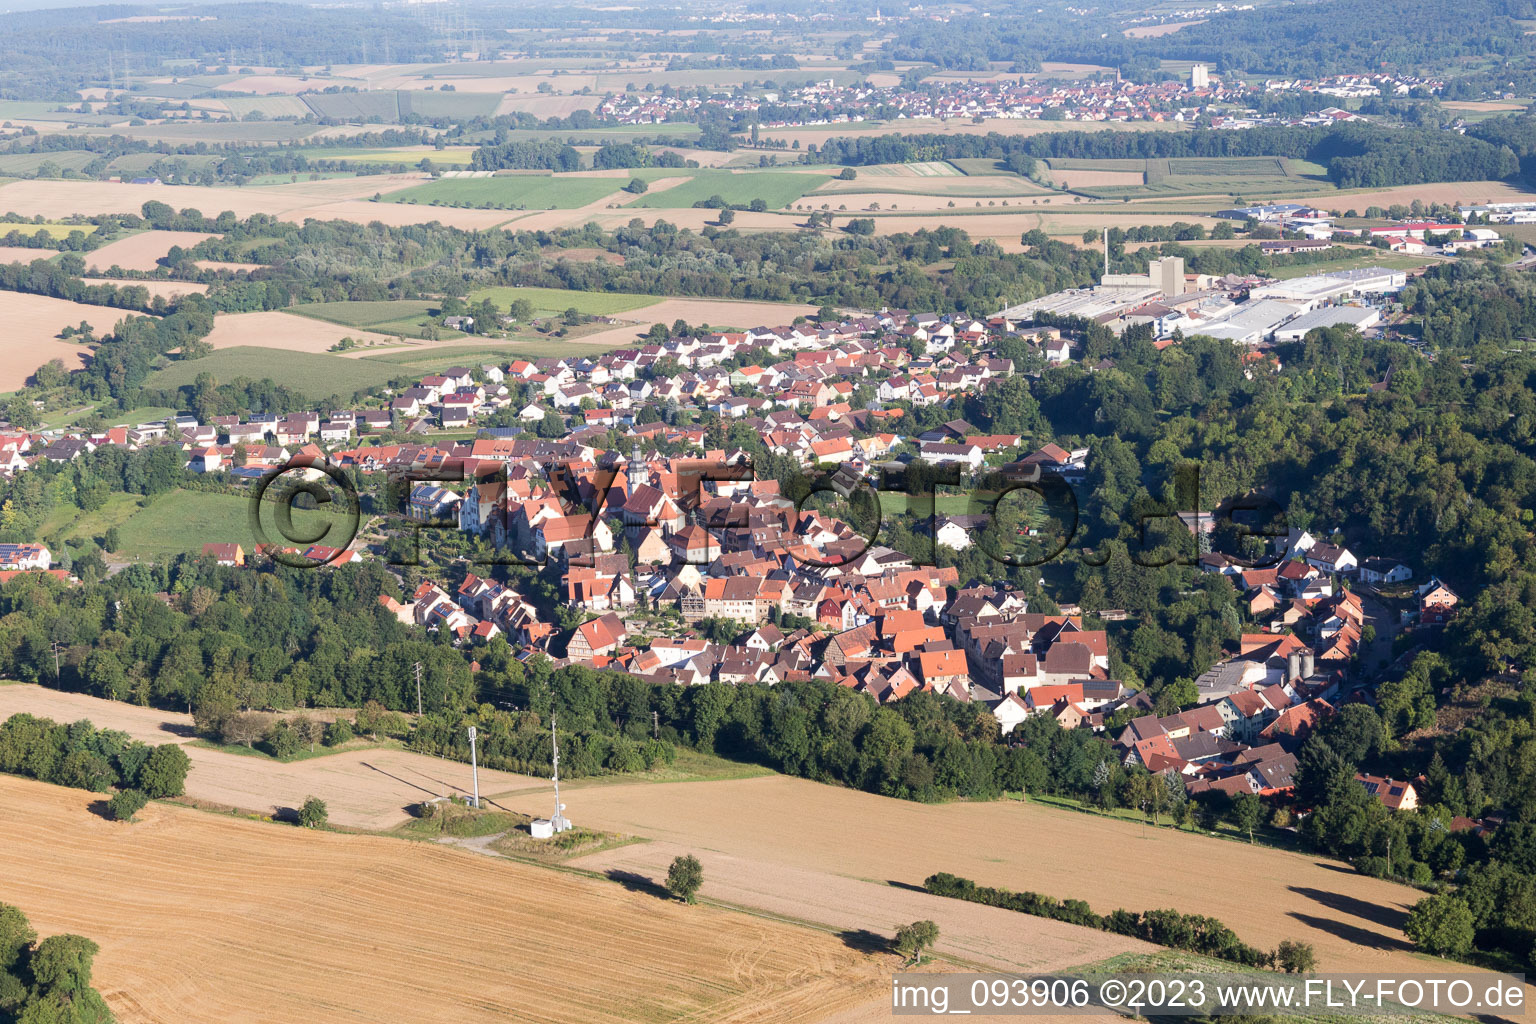 Village view in Kraichtal in the state Baden-Wurttemberg, Germany